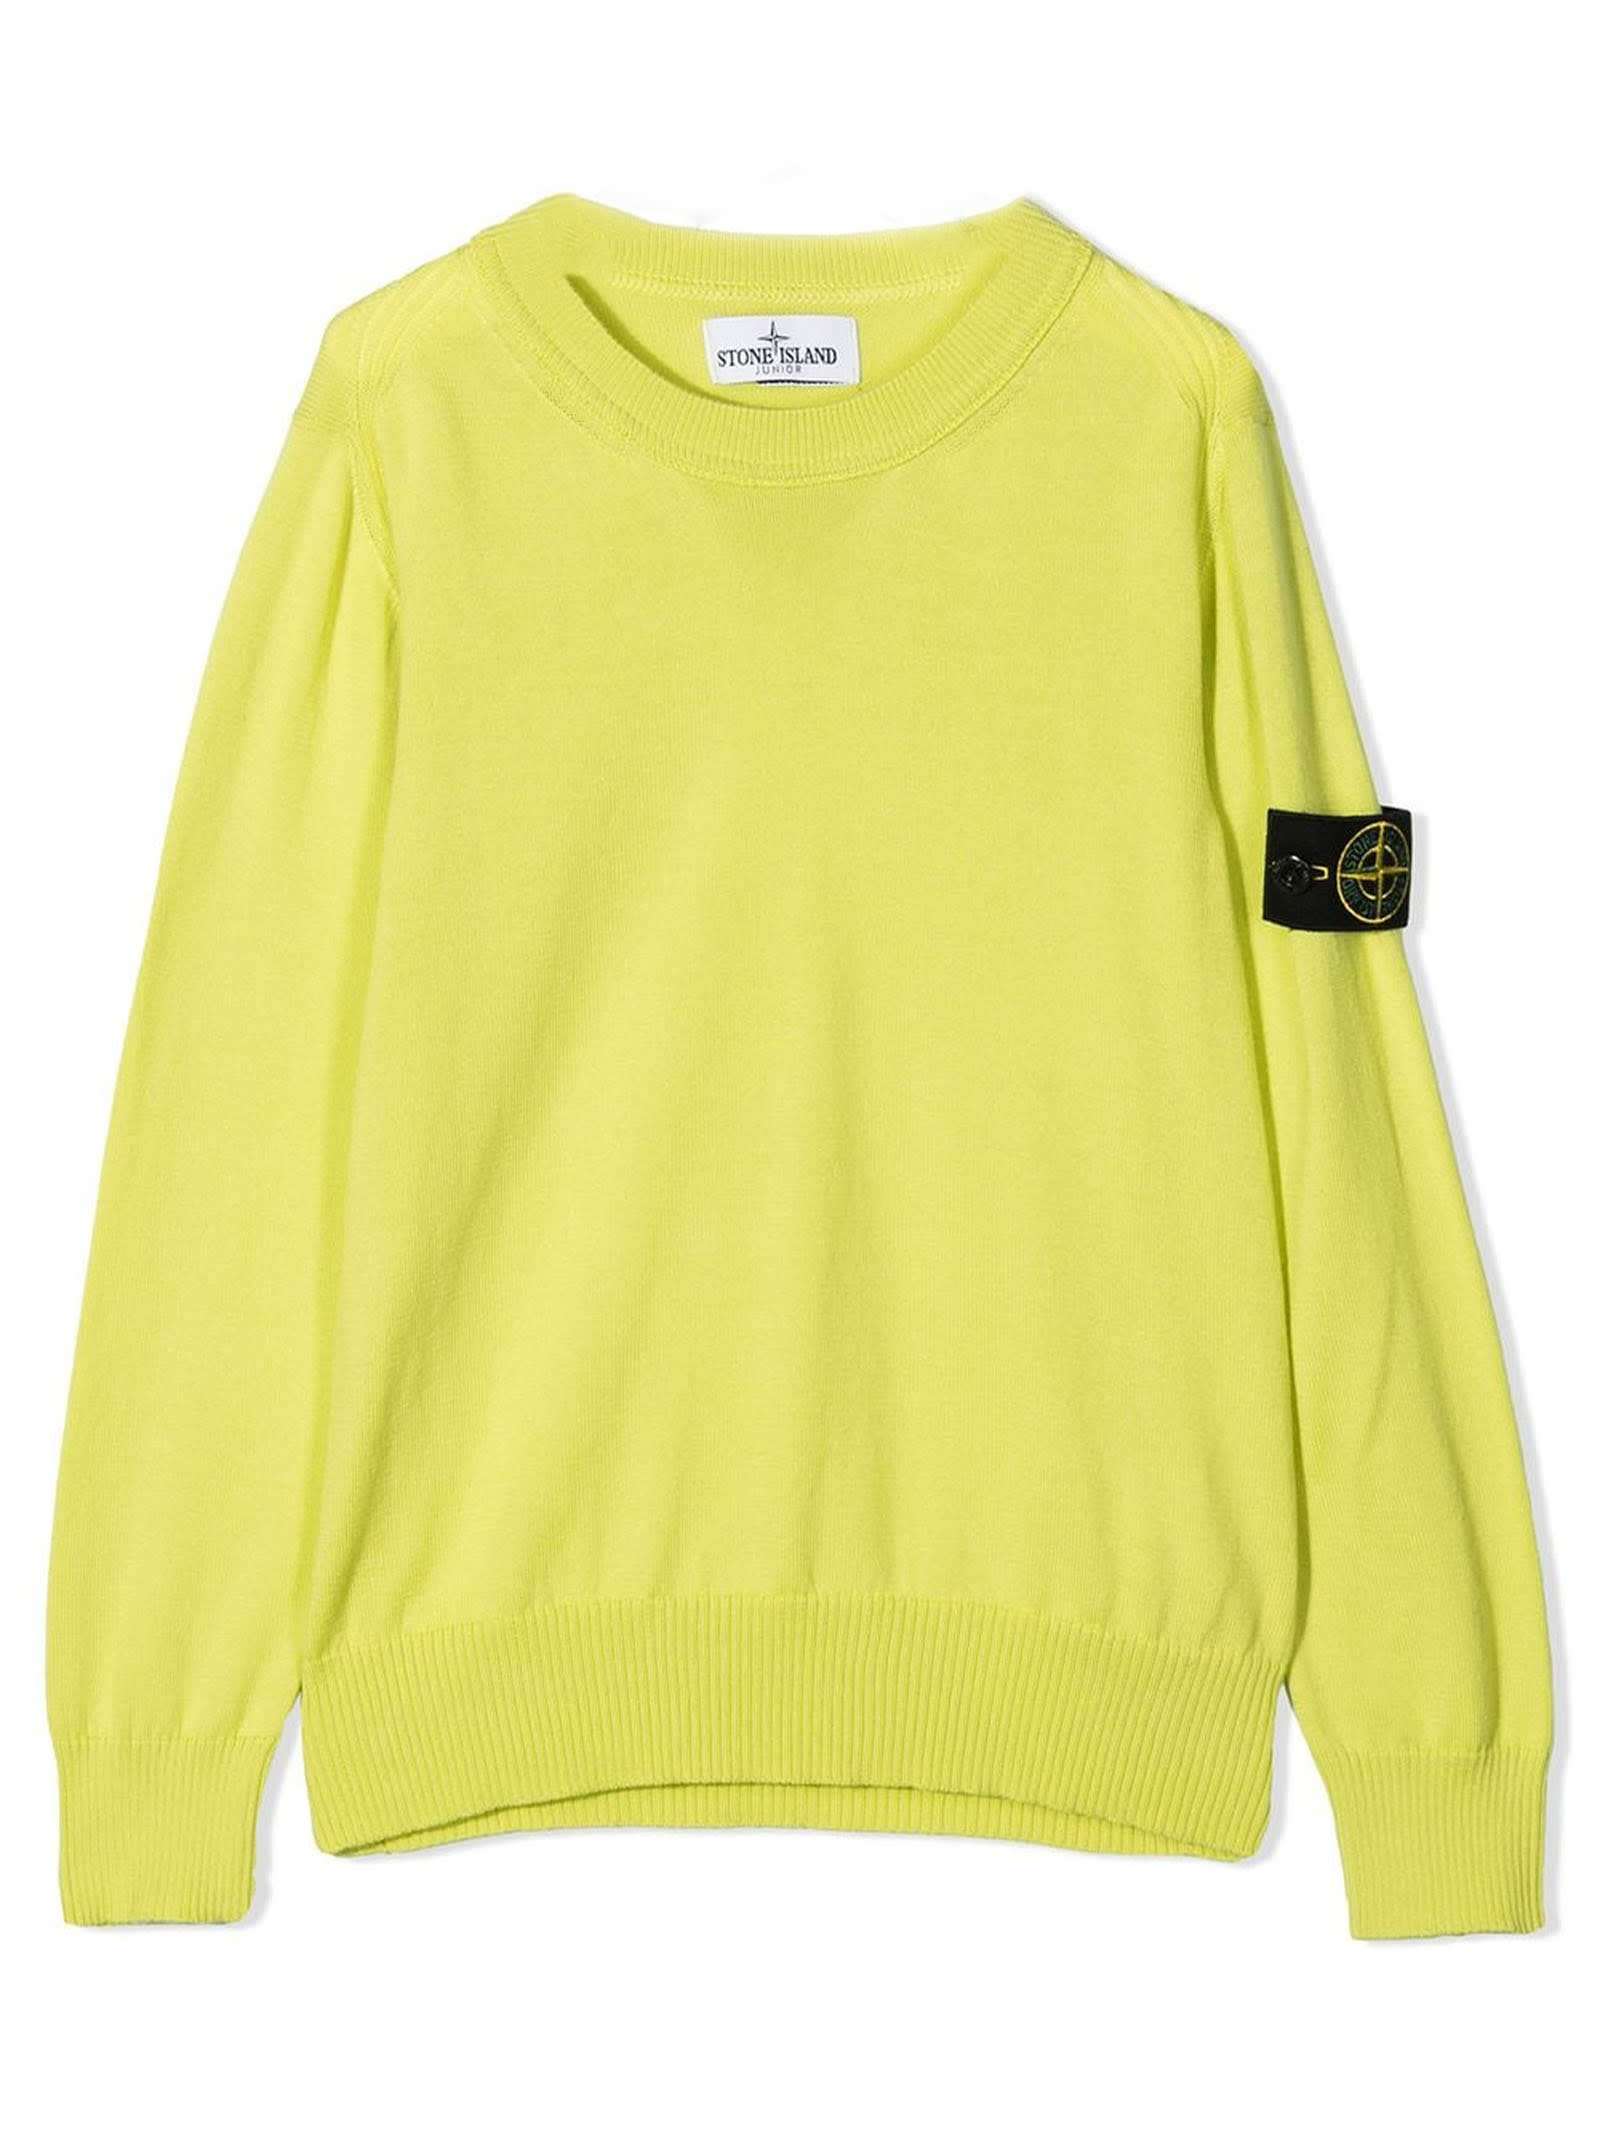 Stone Island Yellow Cotton Sweatshirt